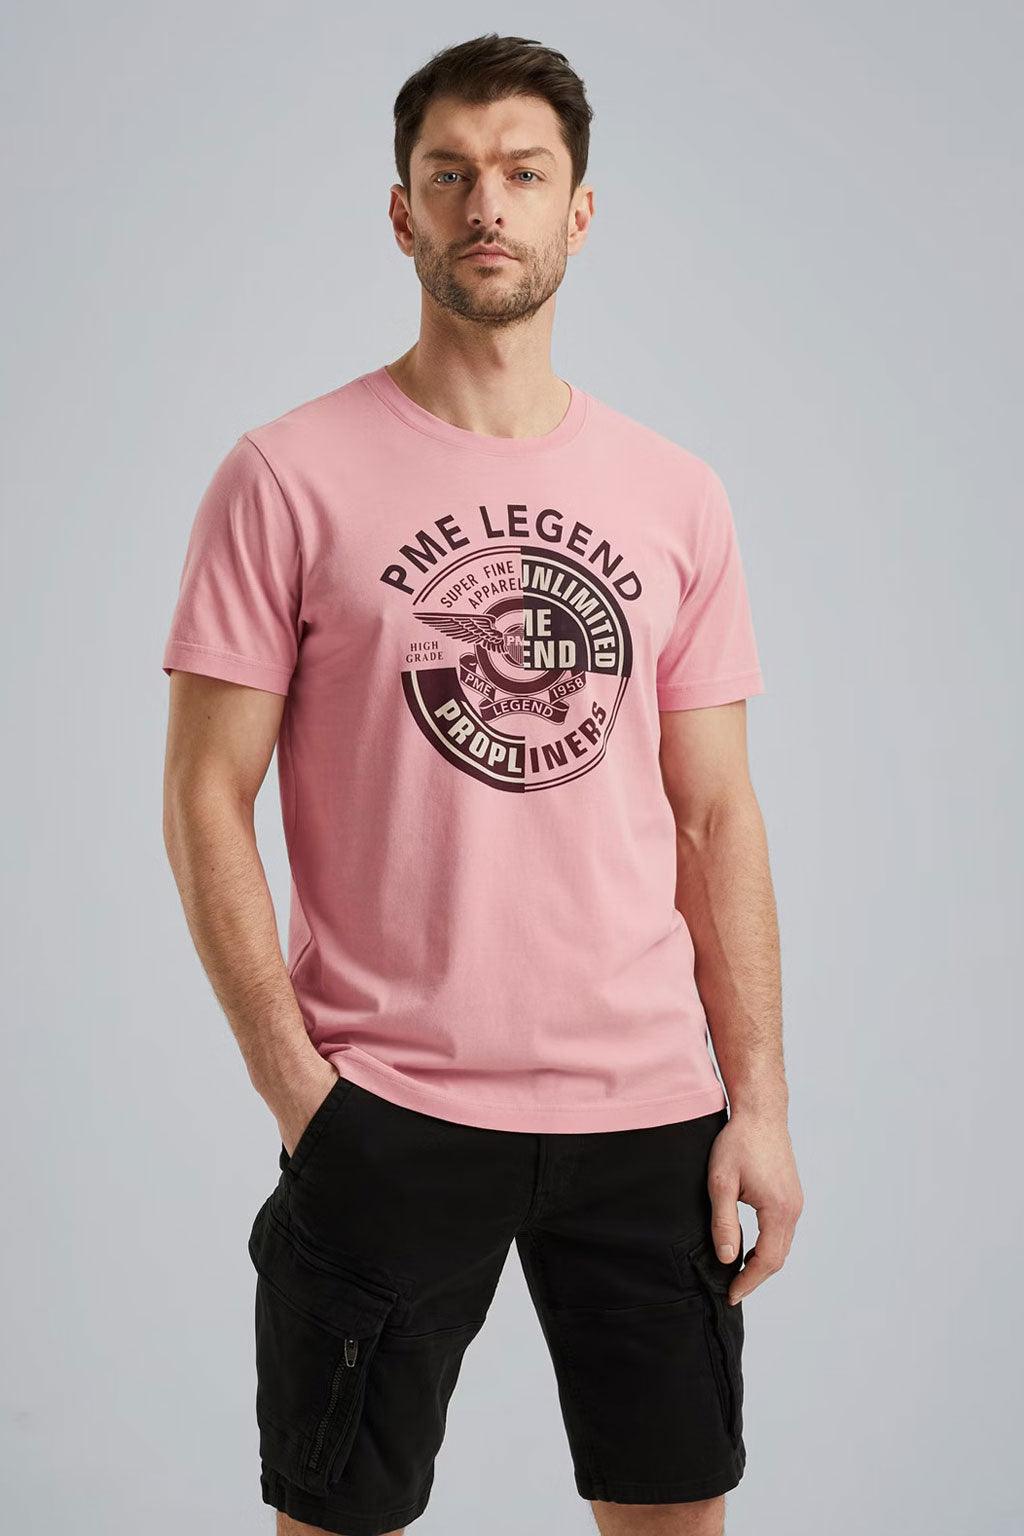 PME Legend t-shirt - Big Boss | the menswear concept